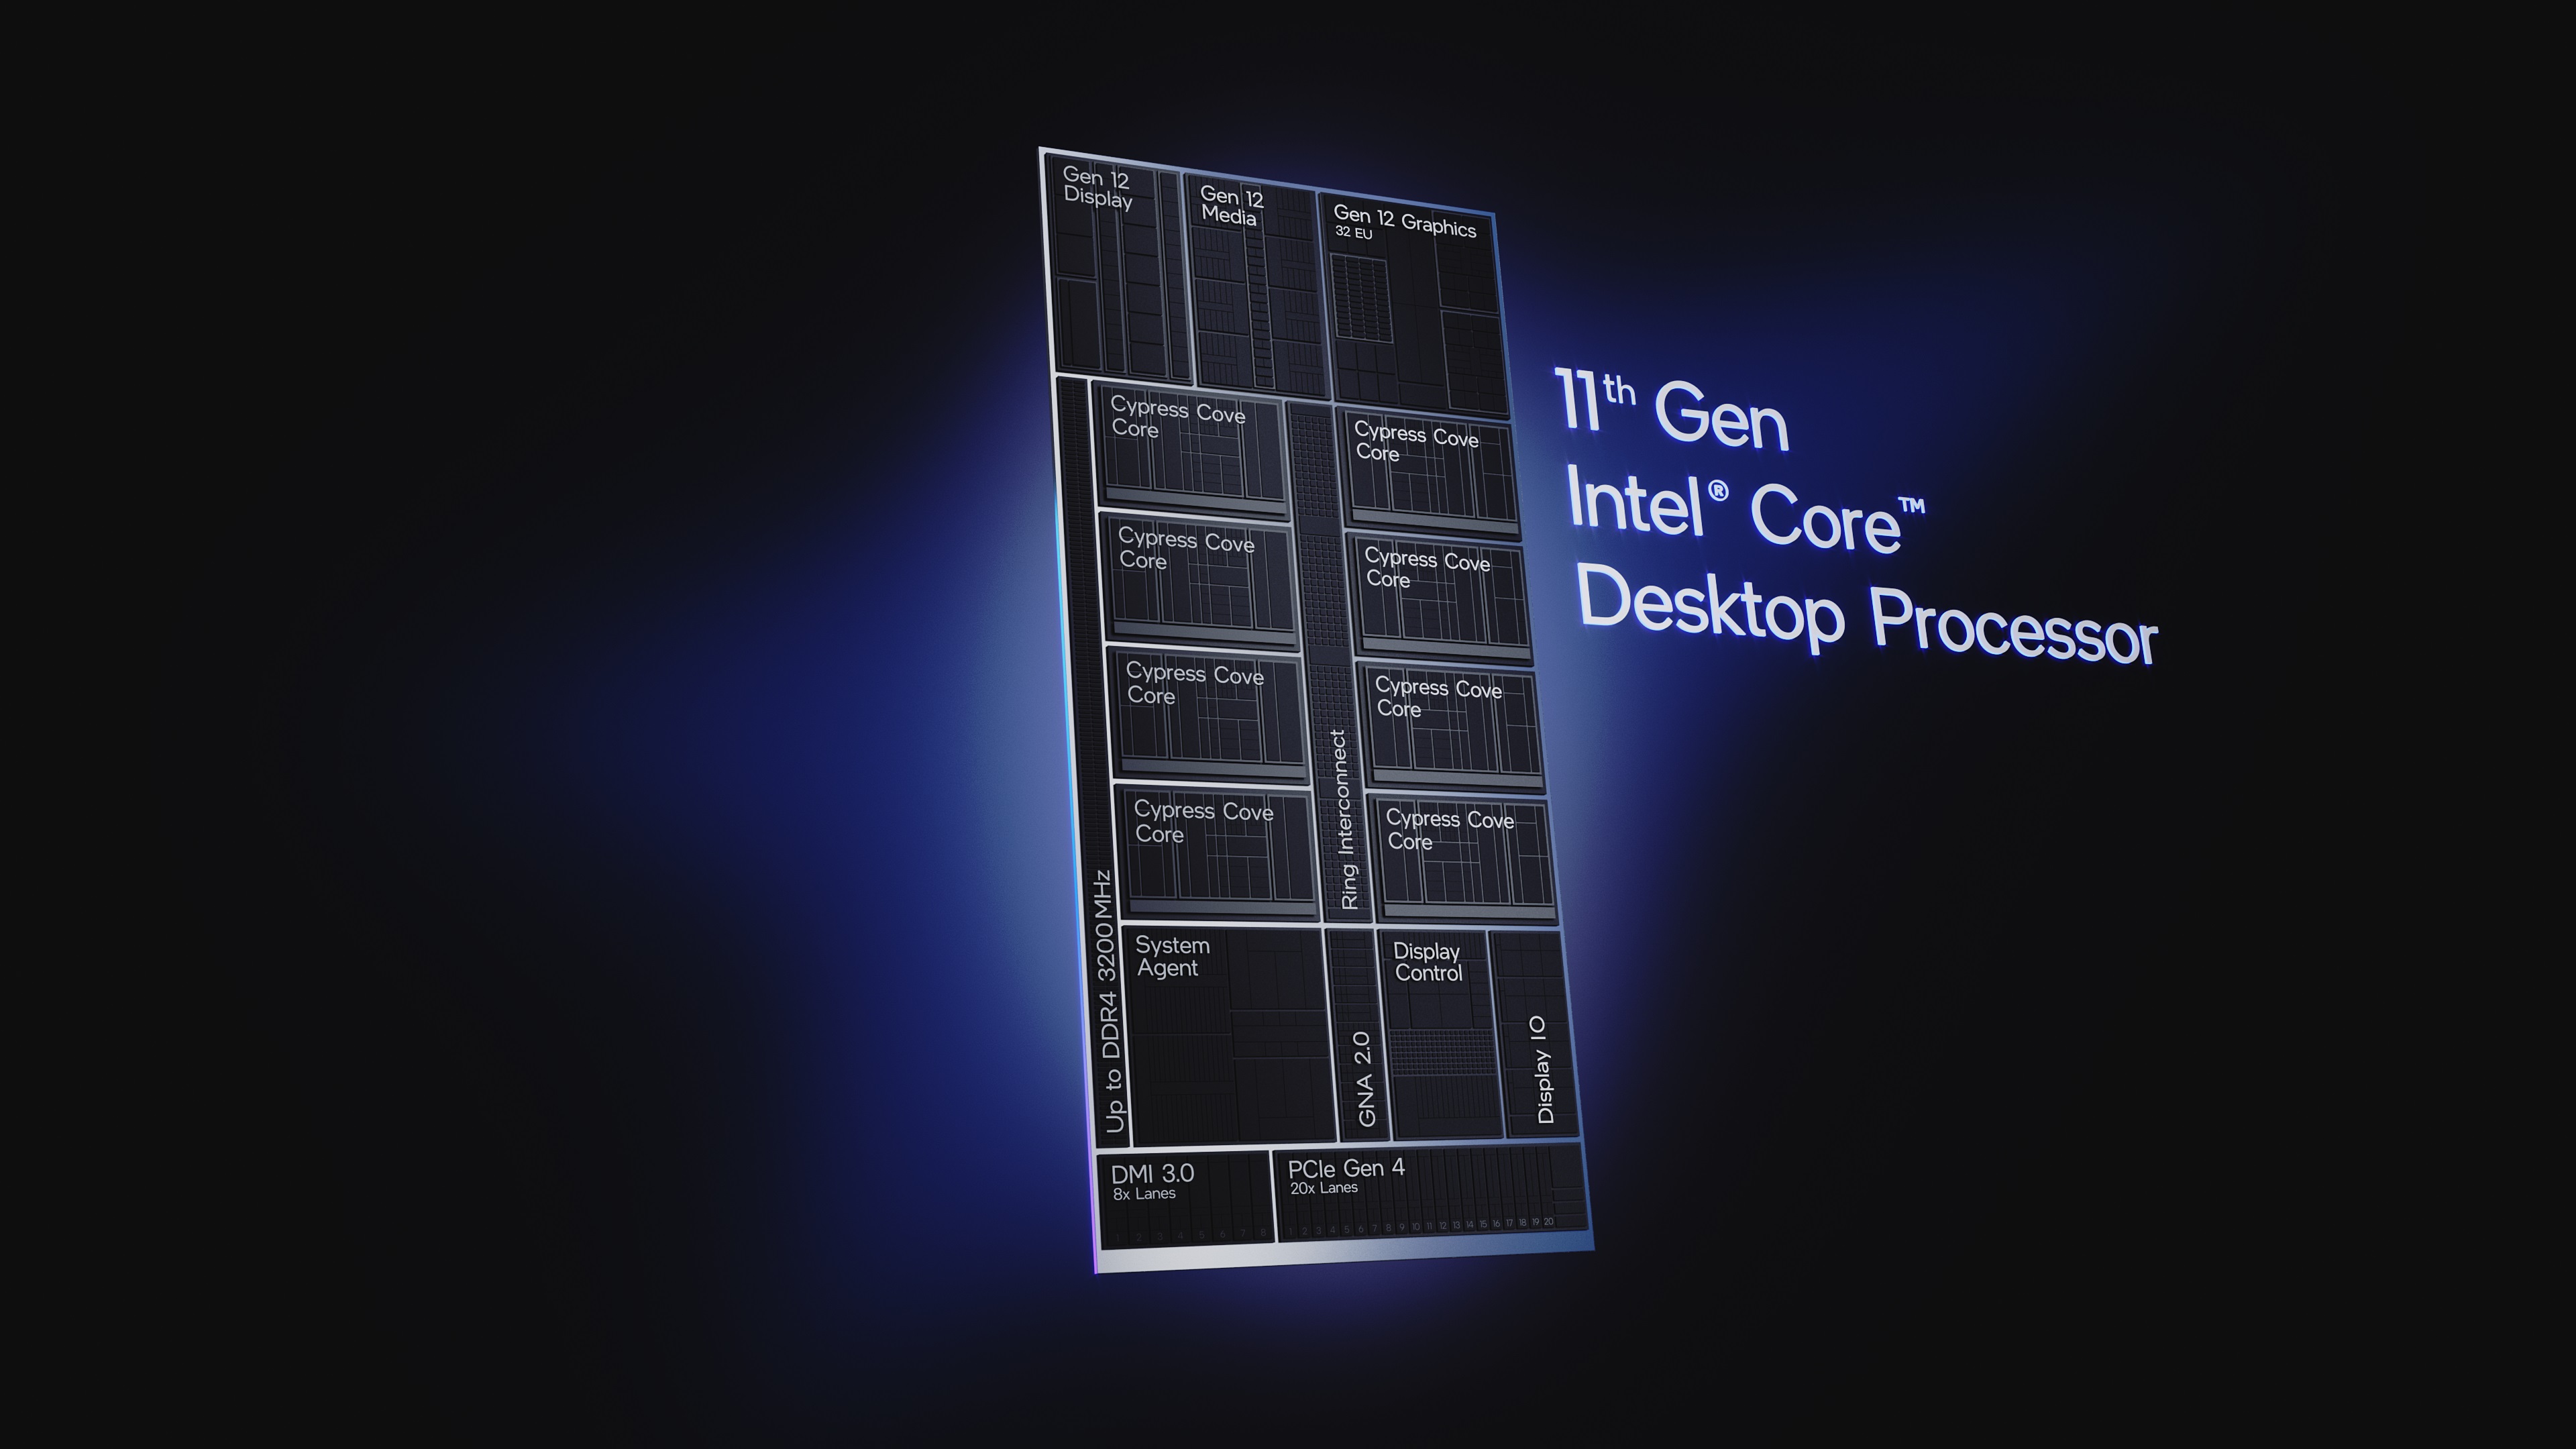 Core i5 12400 uhd graphics 730. 11th Gen Intel Core. Intel Core i9. Intel Graphics 730. Intel UHD 730.